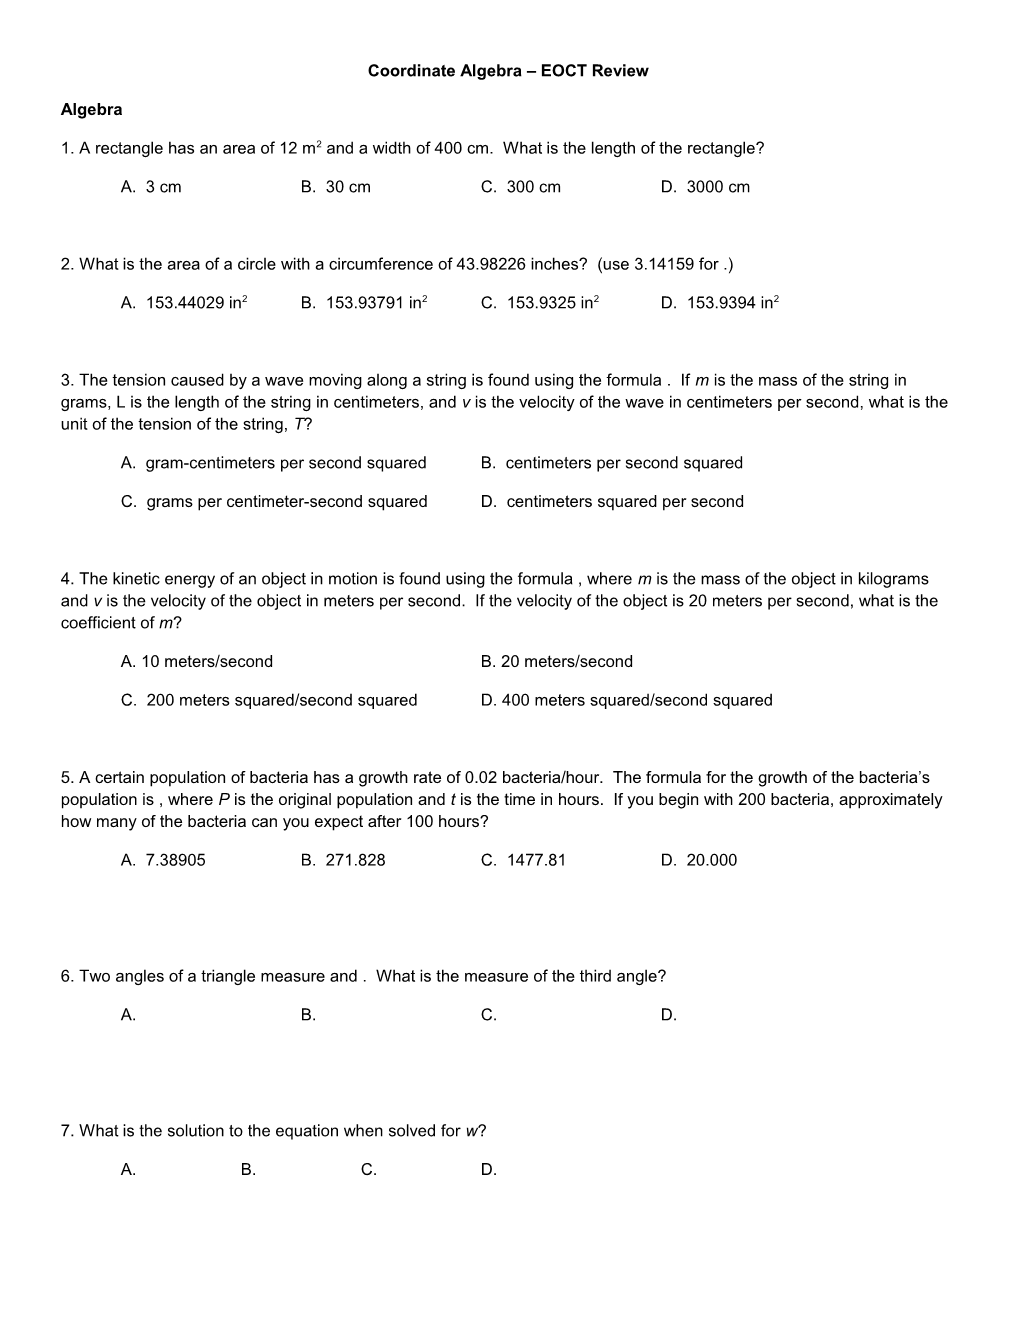 Coordinate Algebra EOCT Review